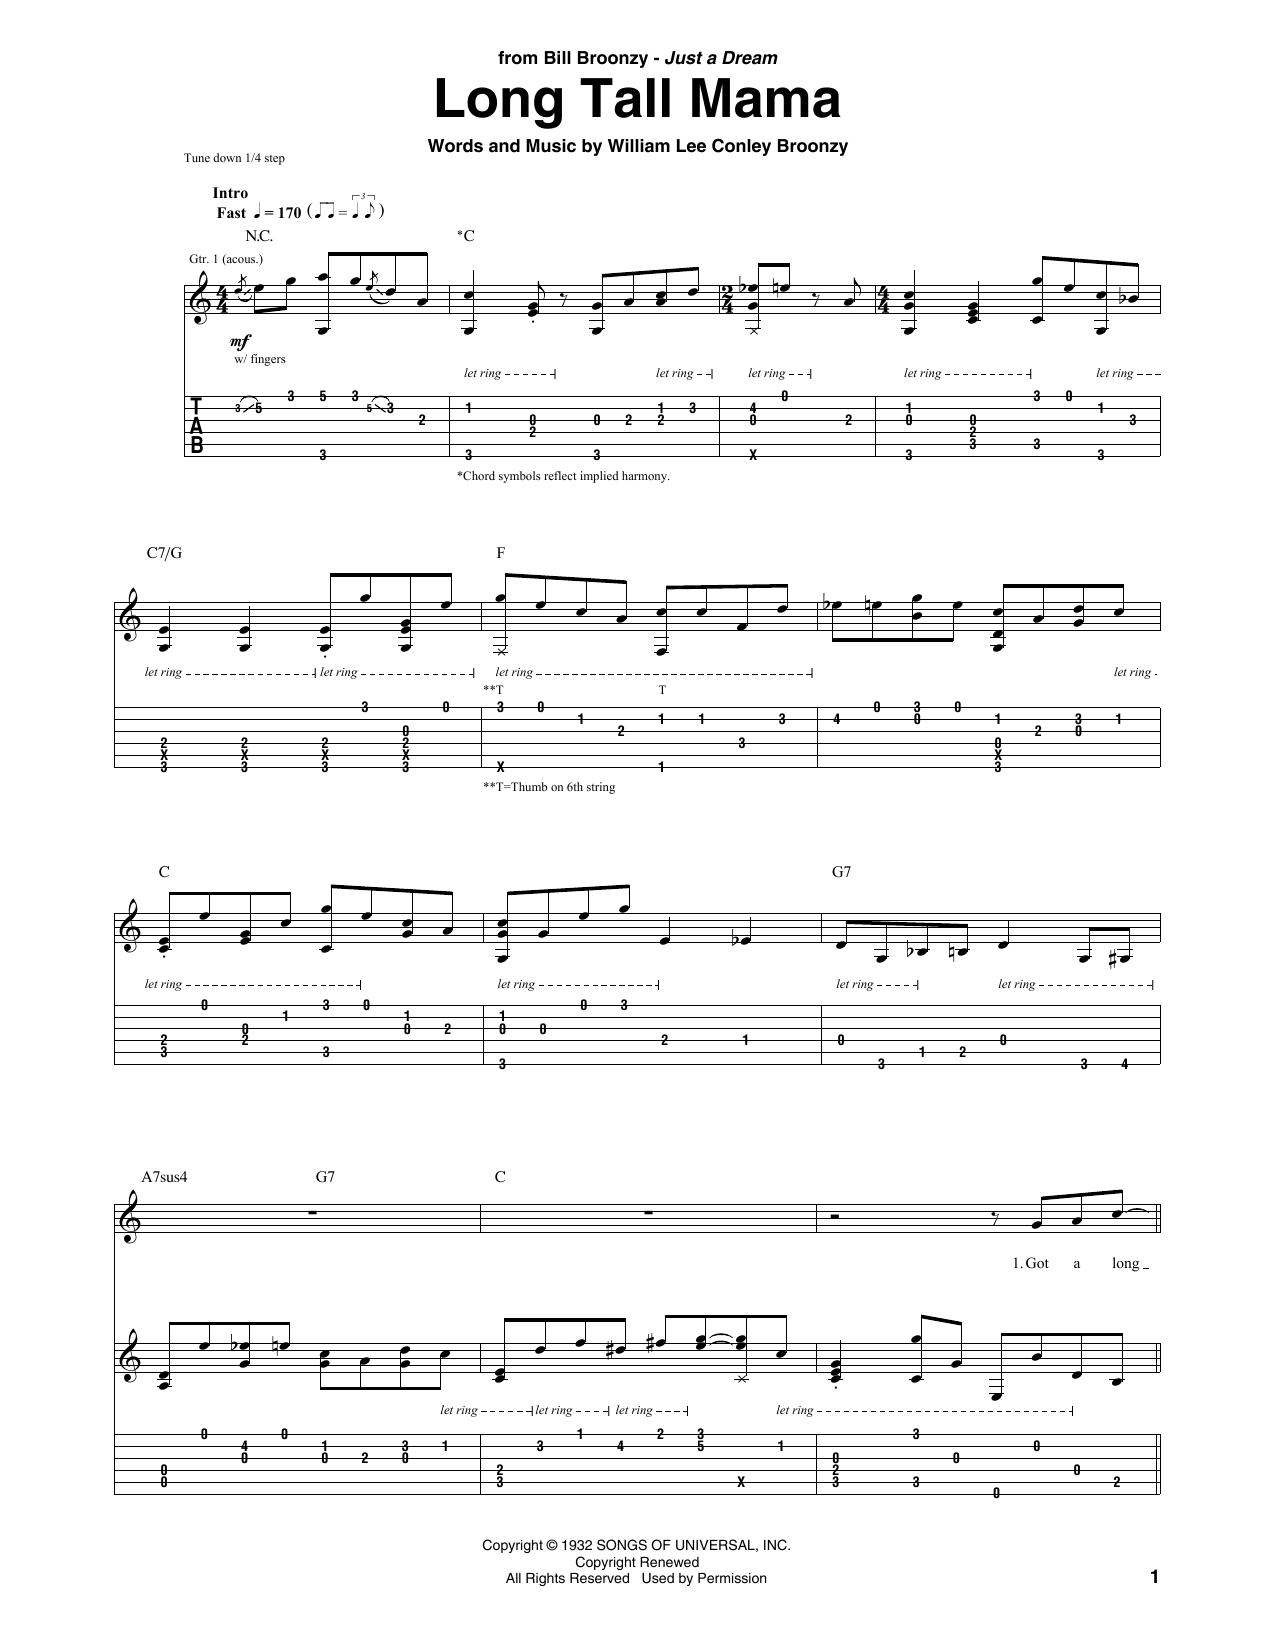 Big Bill Broonzy Long Tall Mama Sheet Music Notes & Chords for Guitar Tab - Download or Print PDF